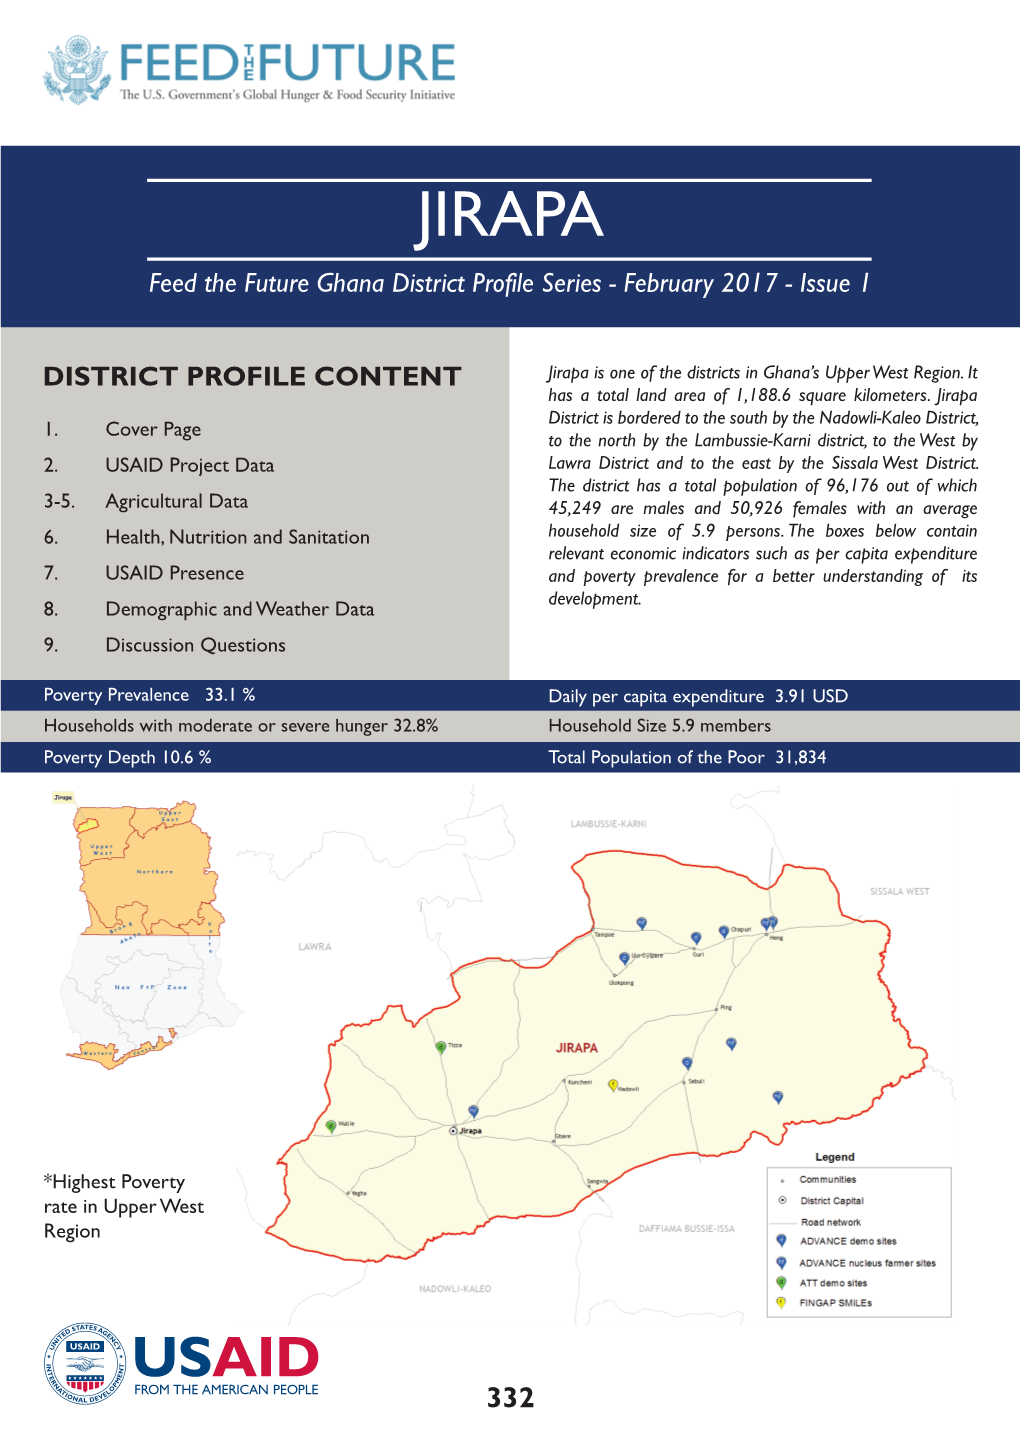 JIRAPA Feed the Future Ghana District Profile Series - February 2017 - Issue 1